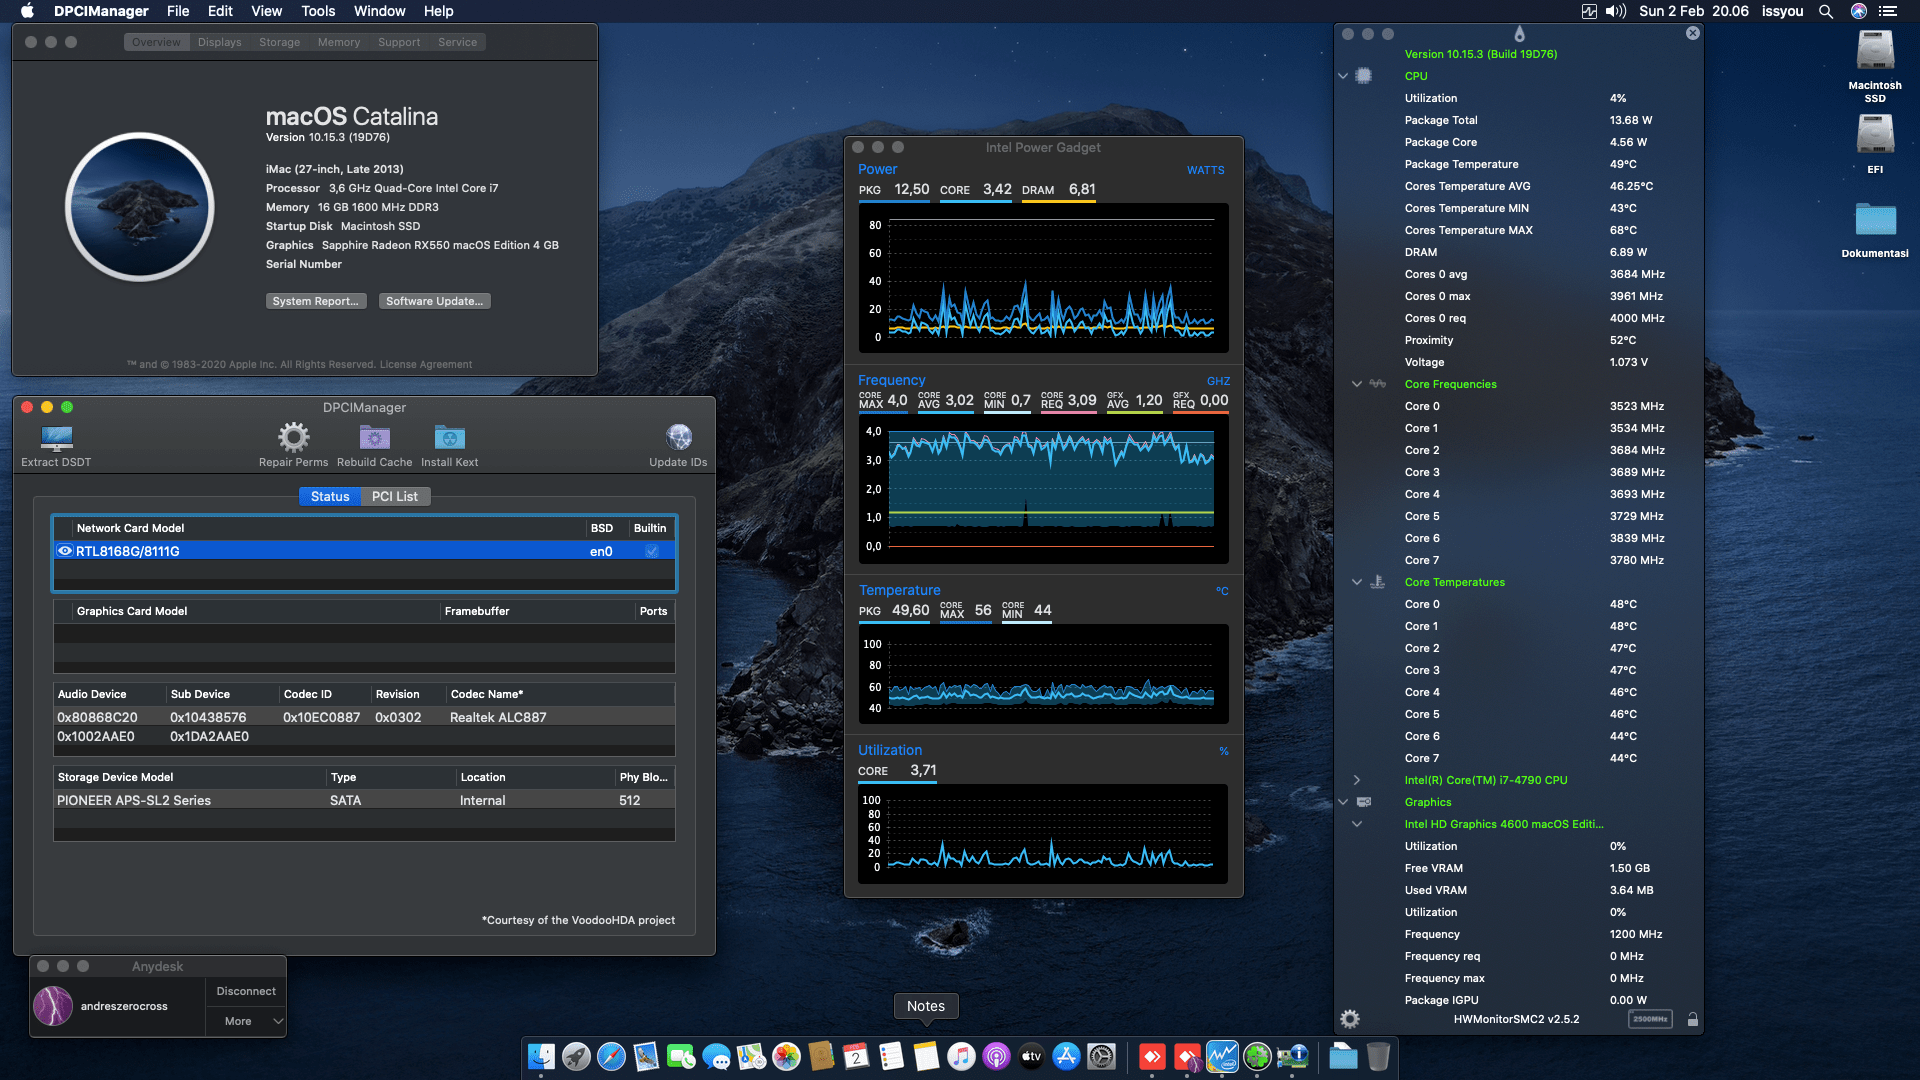 Success Hackintosh macOS Catalina 10.15.3 Build 19D76 in Asus H81ME + Intel Core i7 4790 + Sapphire RX 550